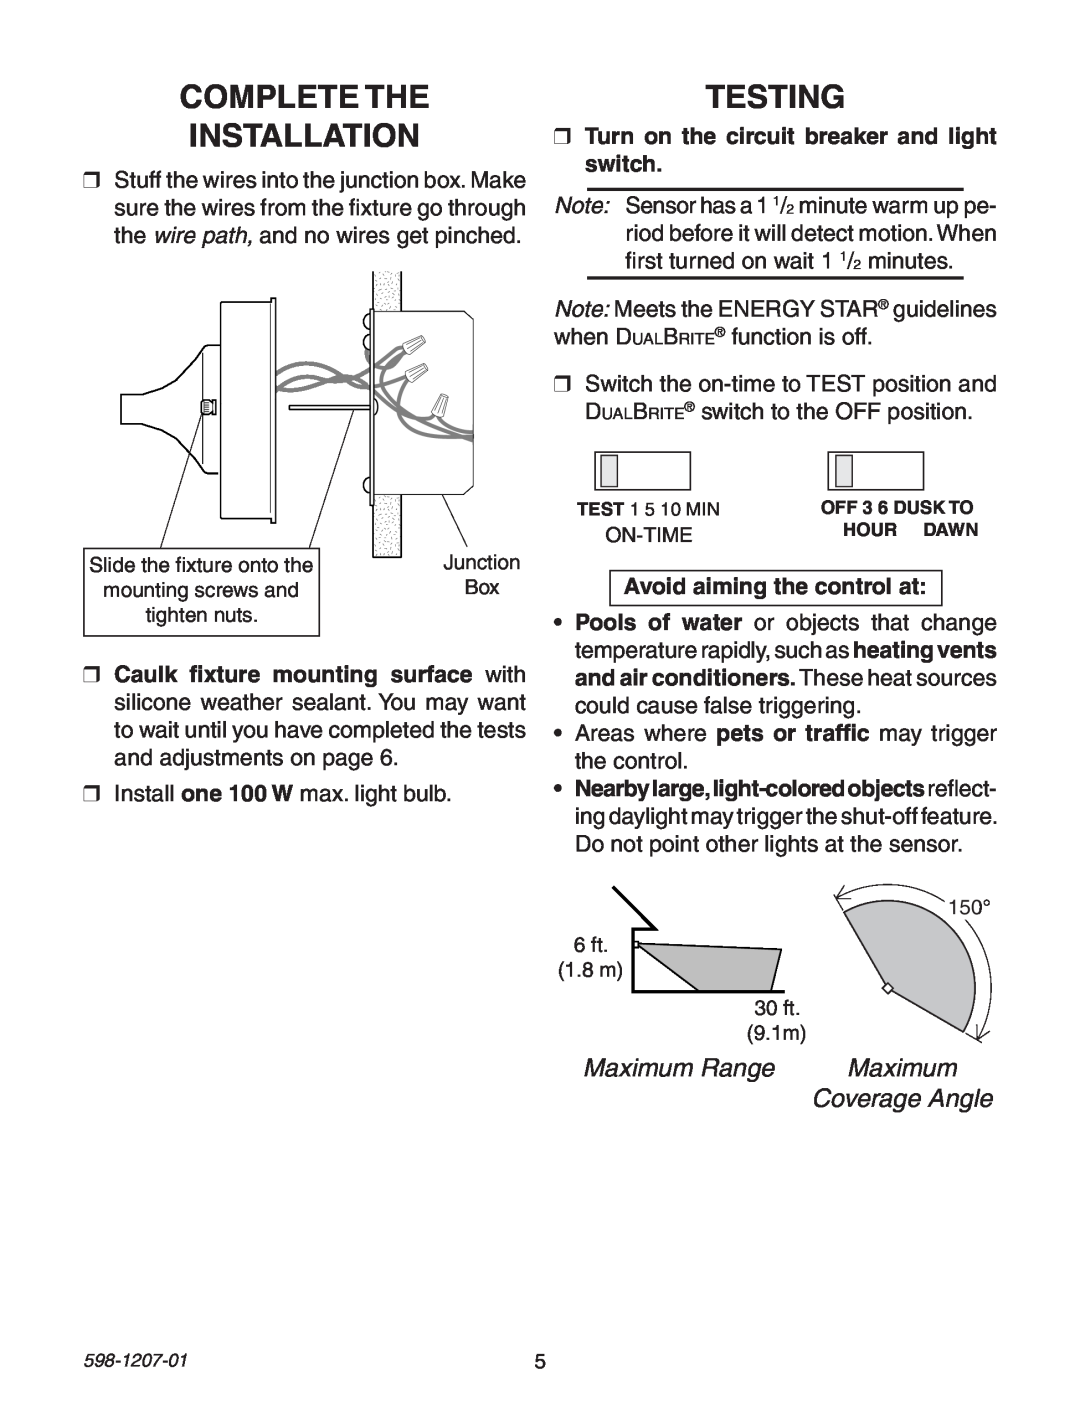 Heath Zenith Motion Sensing Coach Lights manual Complete The Installation, Testing, Maximum Range, Coverage Angle 